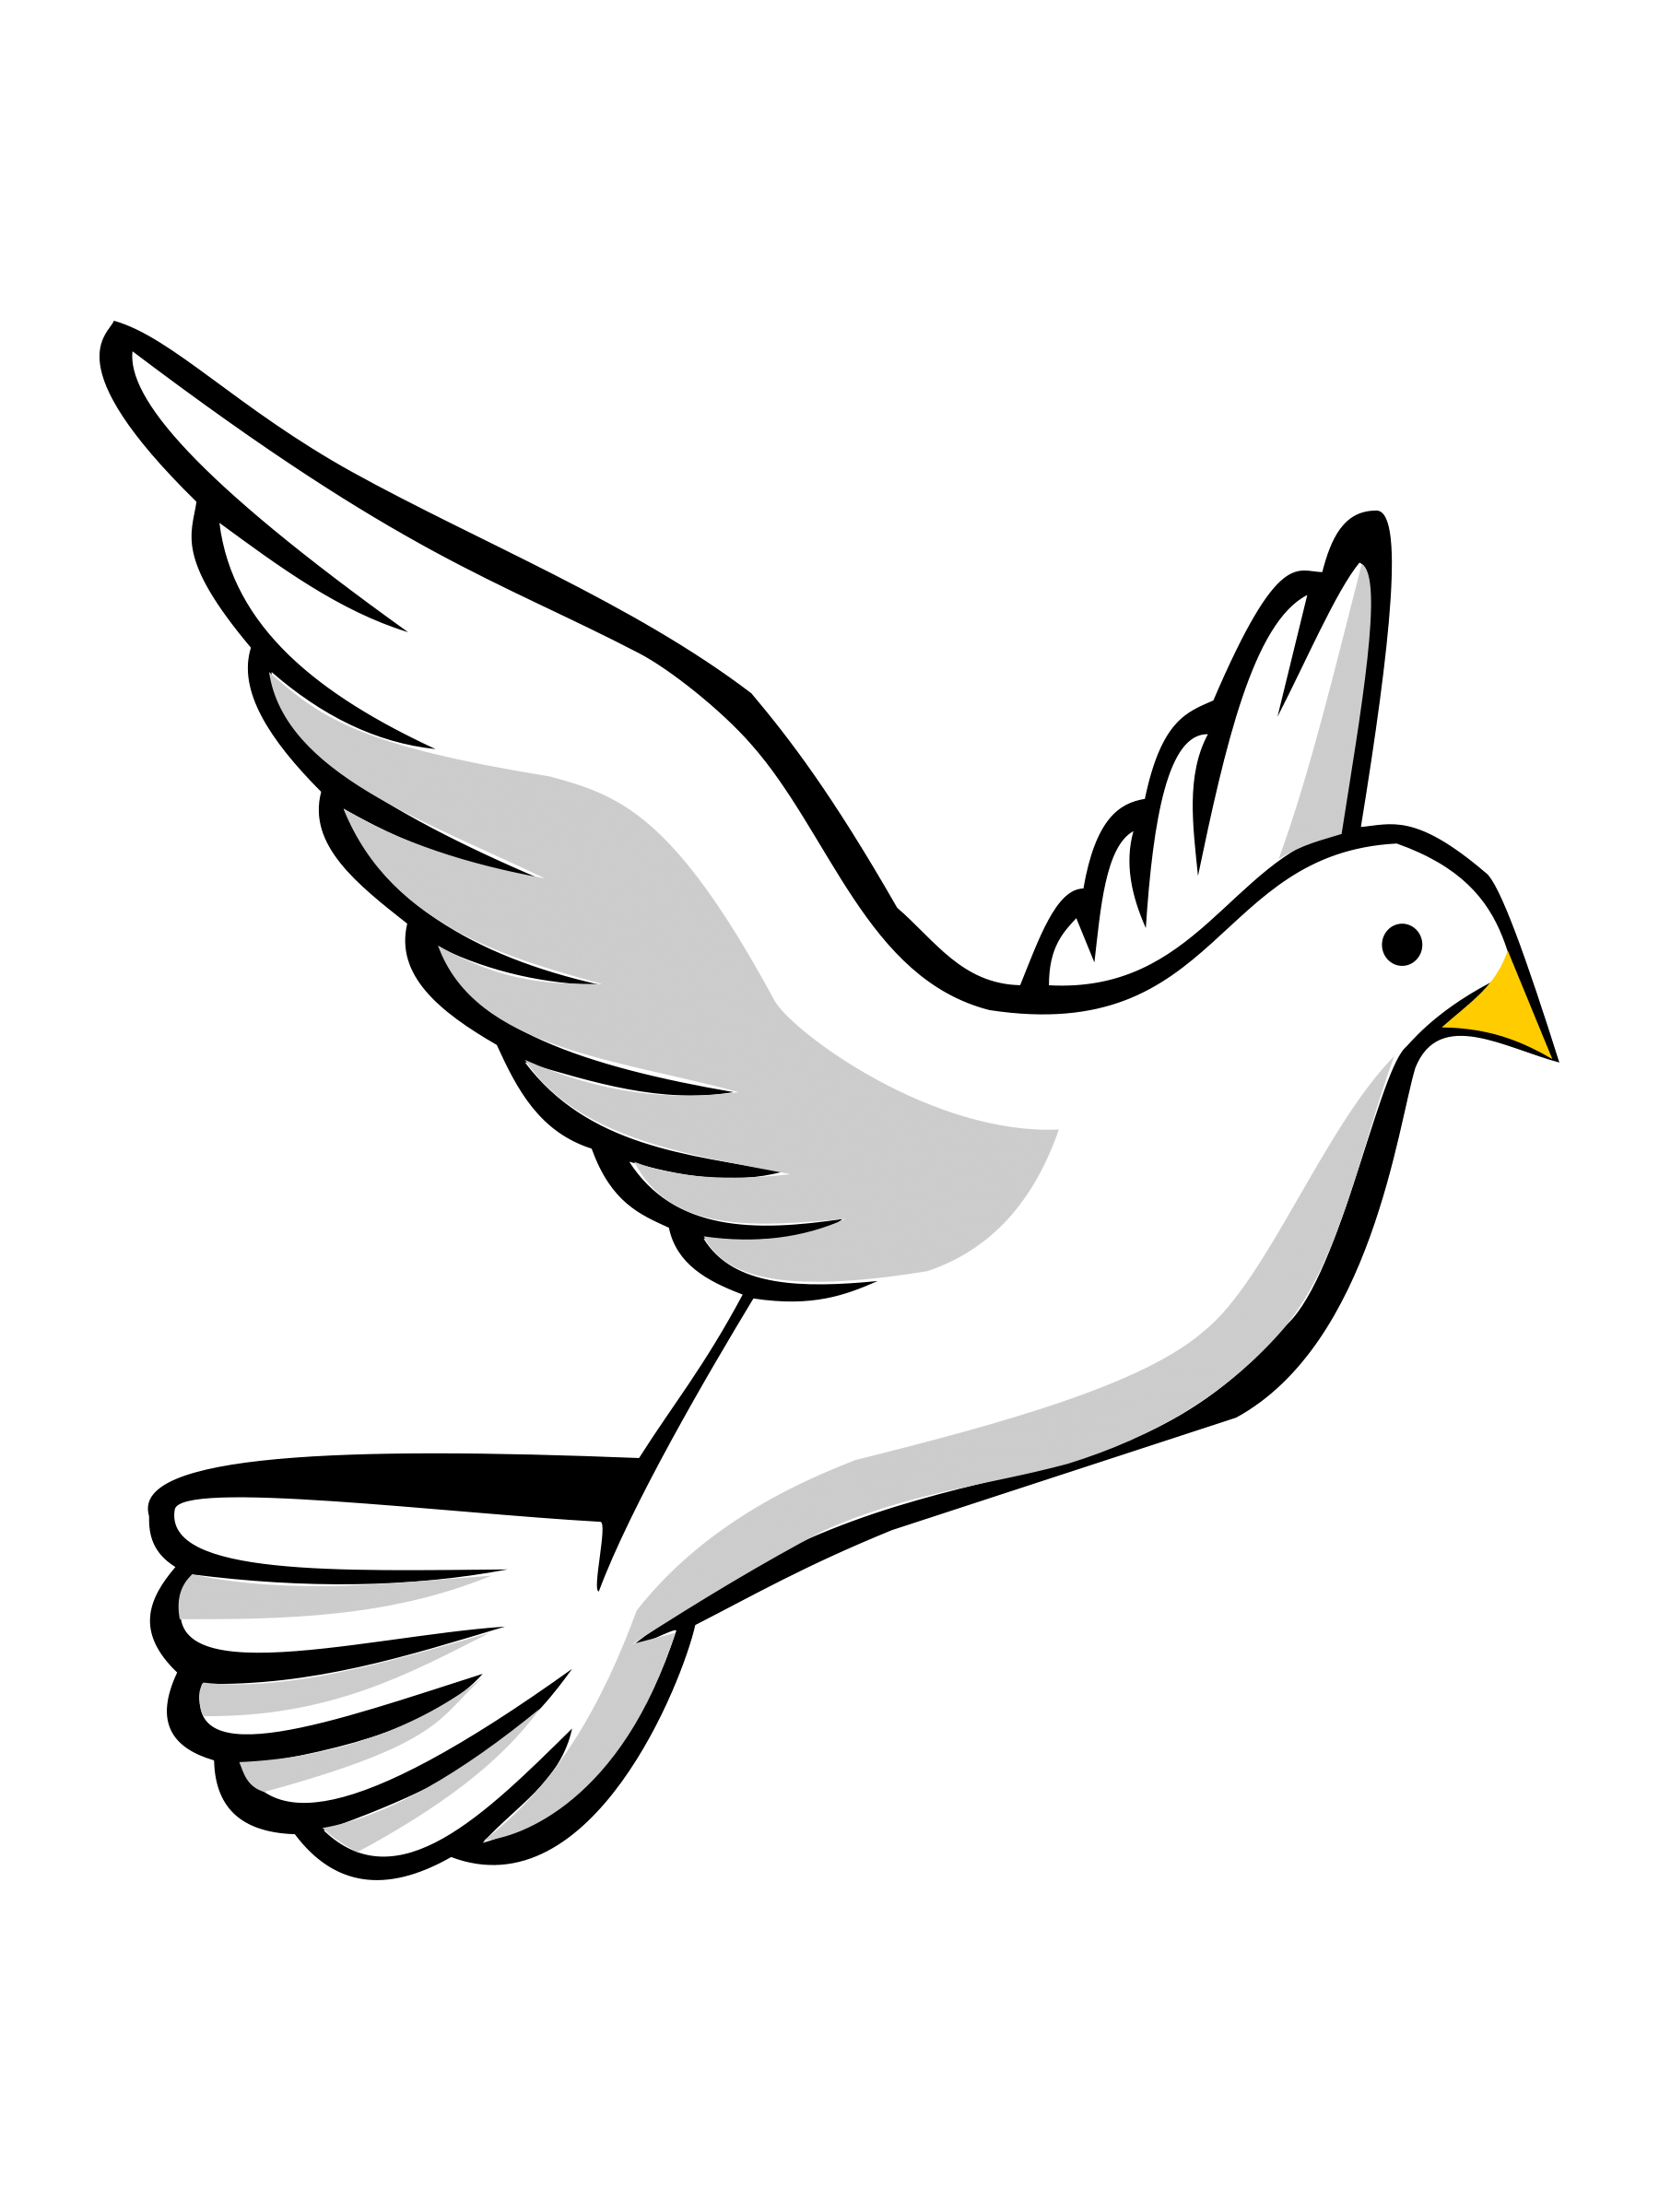 Simple Flying Bird Drawing at GetDrawings Free download